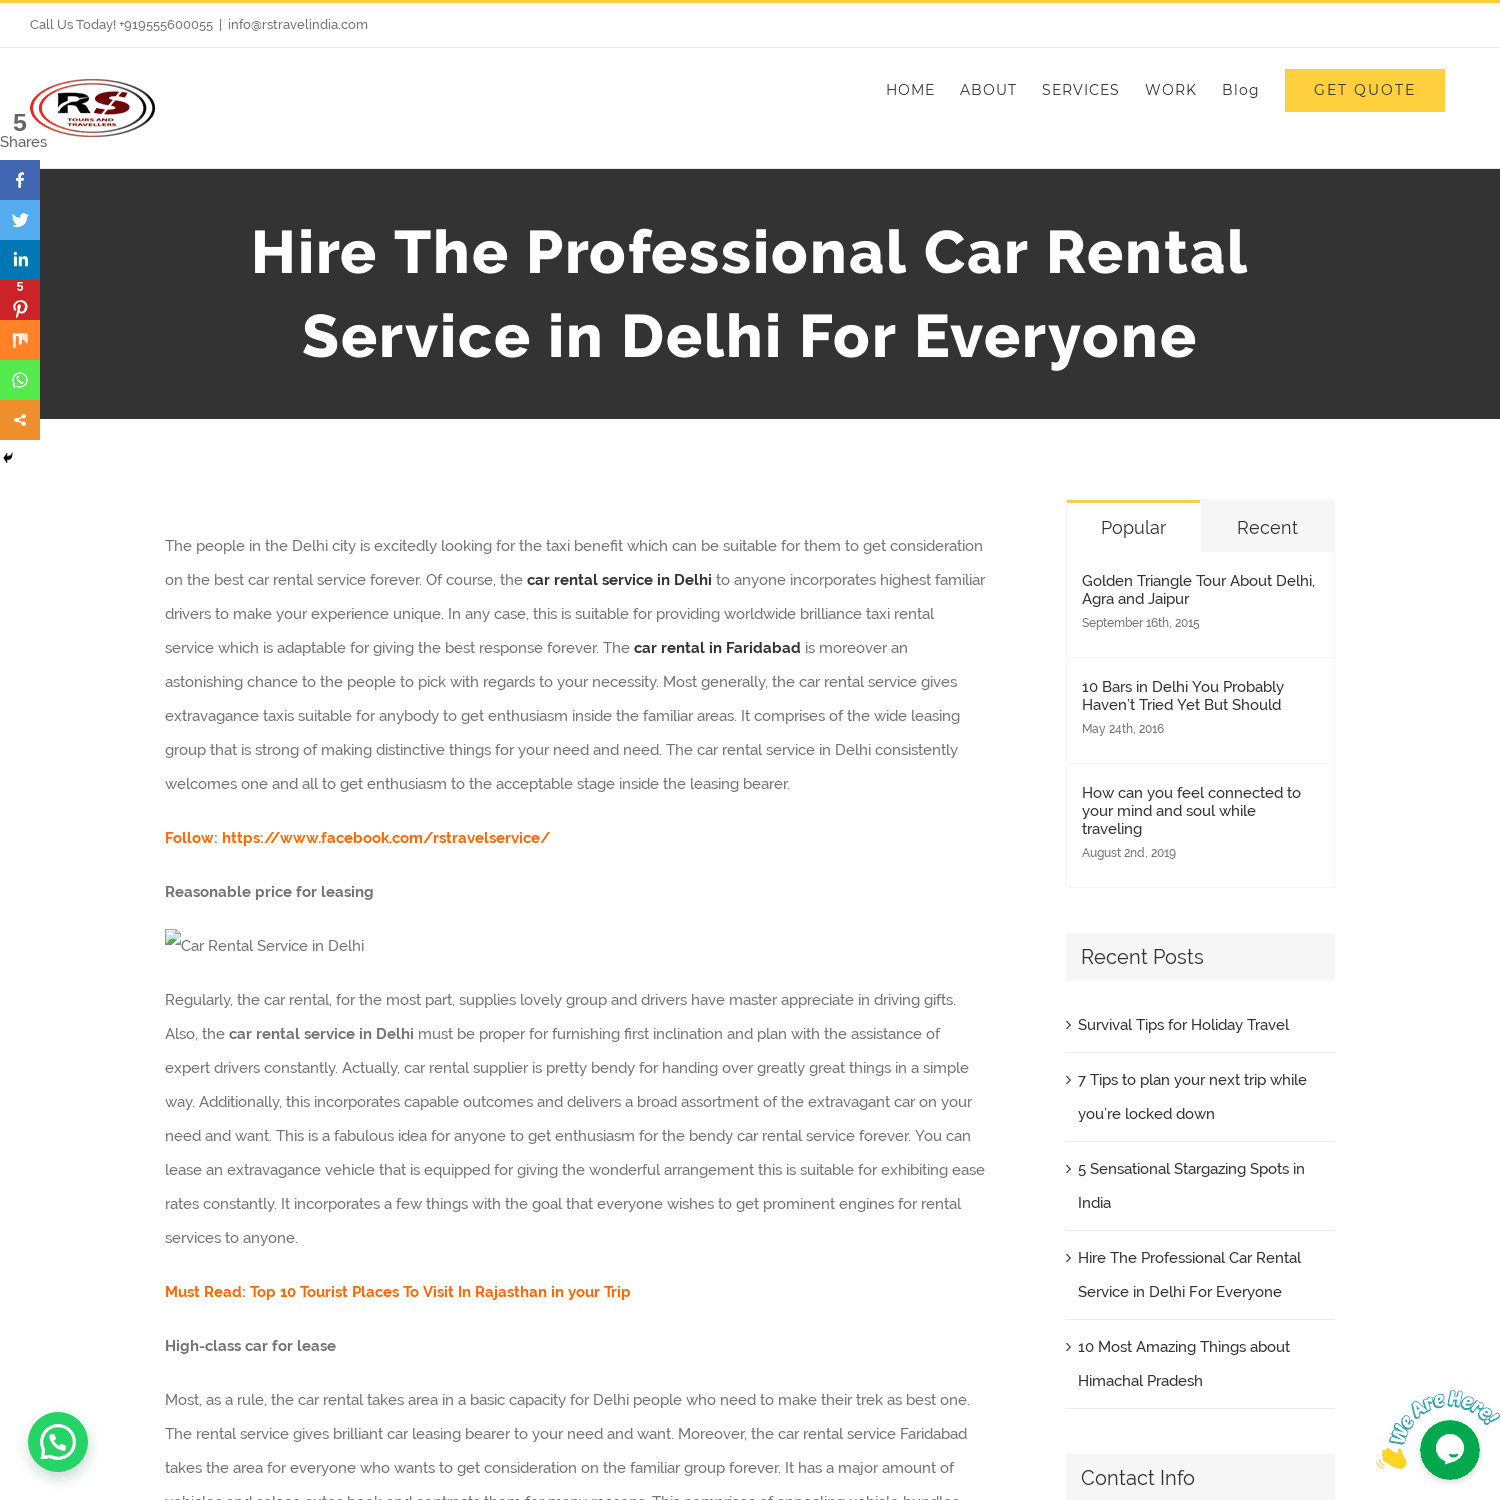 Car Rental Service in Delhi Hire The Professional Car Rental For Everyone